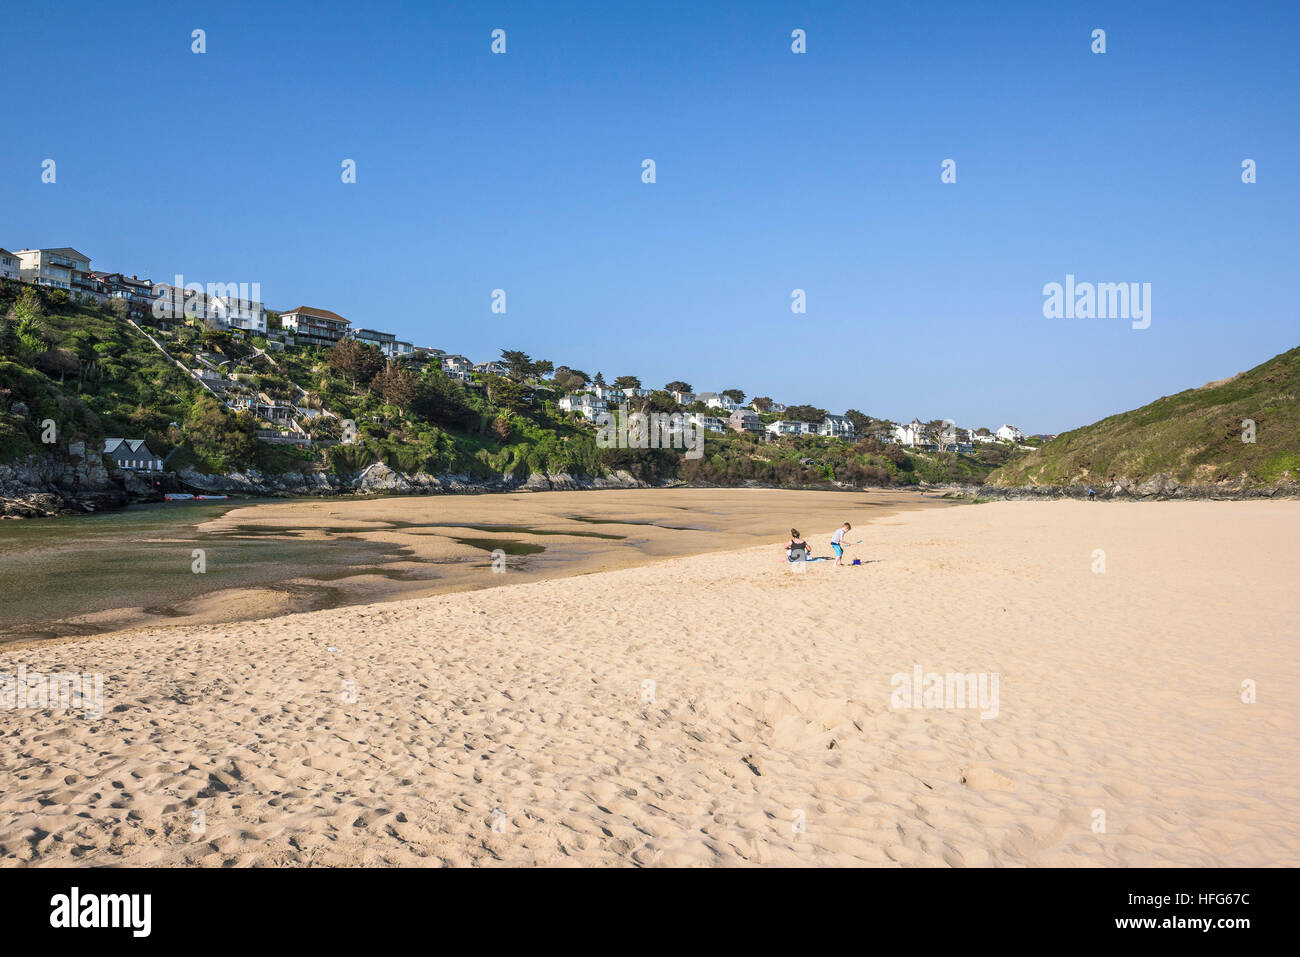 La plage de Crantock primé à Newquay, Cornwall, England, UK. Banque D'Images